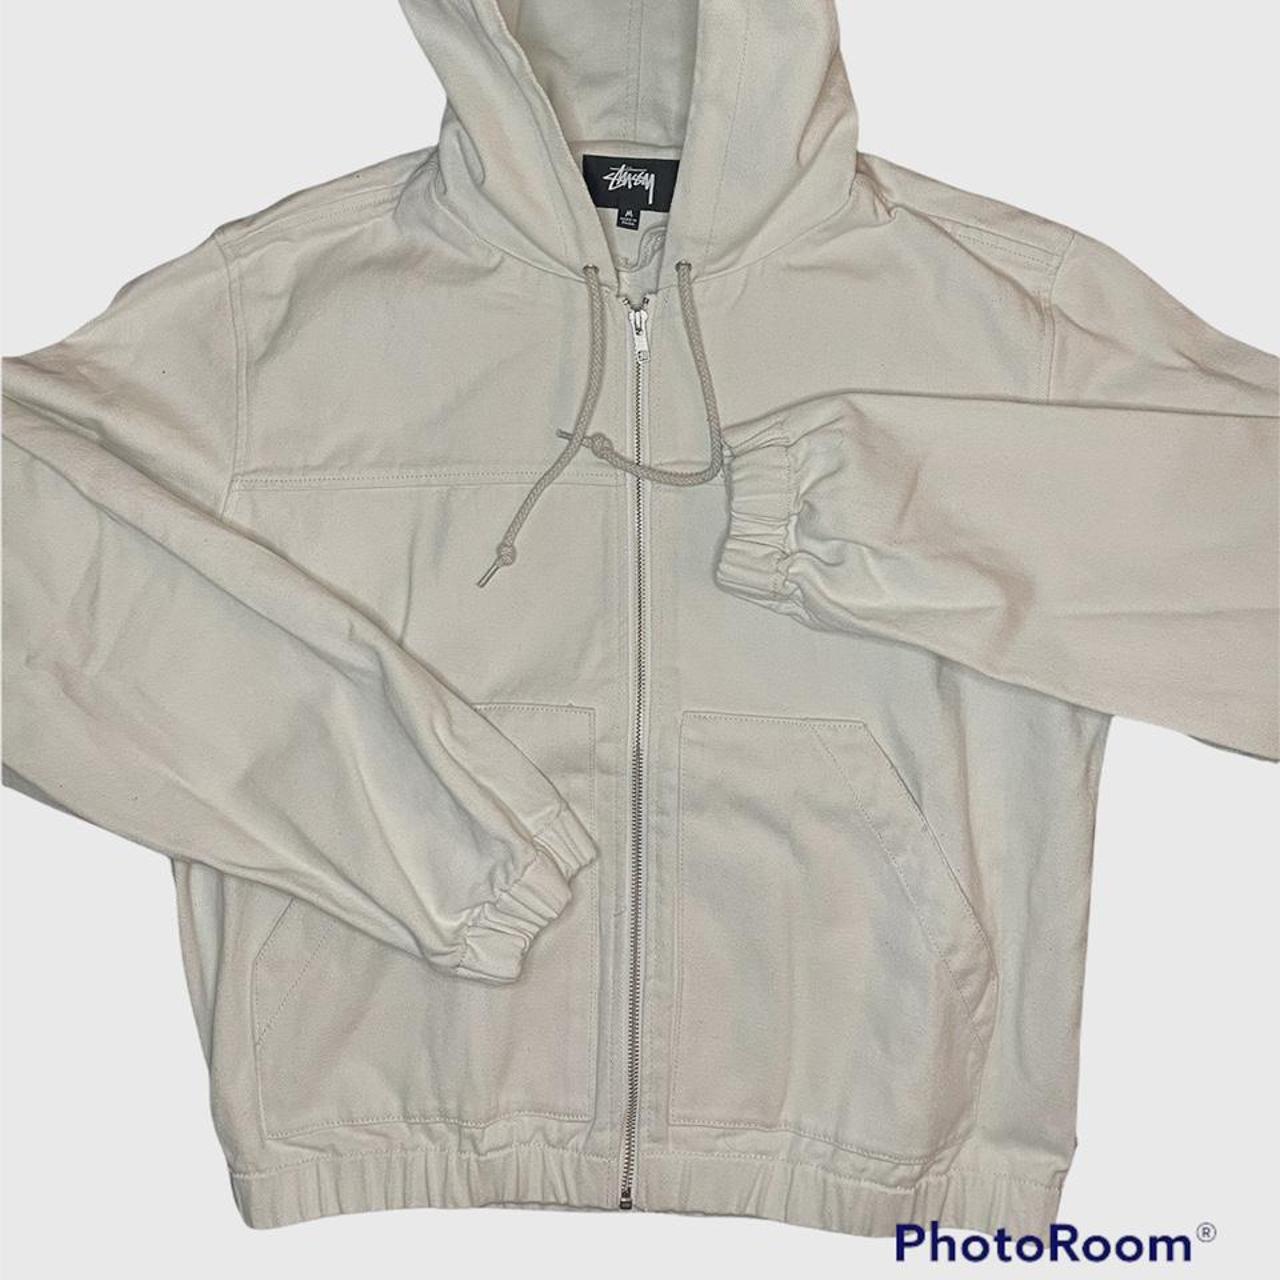 Husky-reps🔥nk × Stussy stone island jacket TNF jacket patagonia